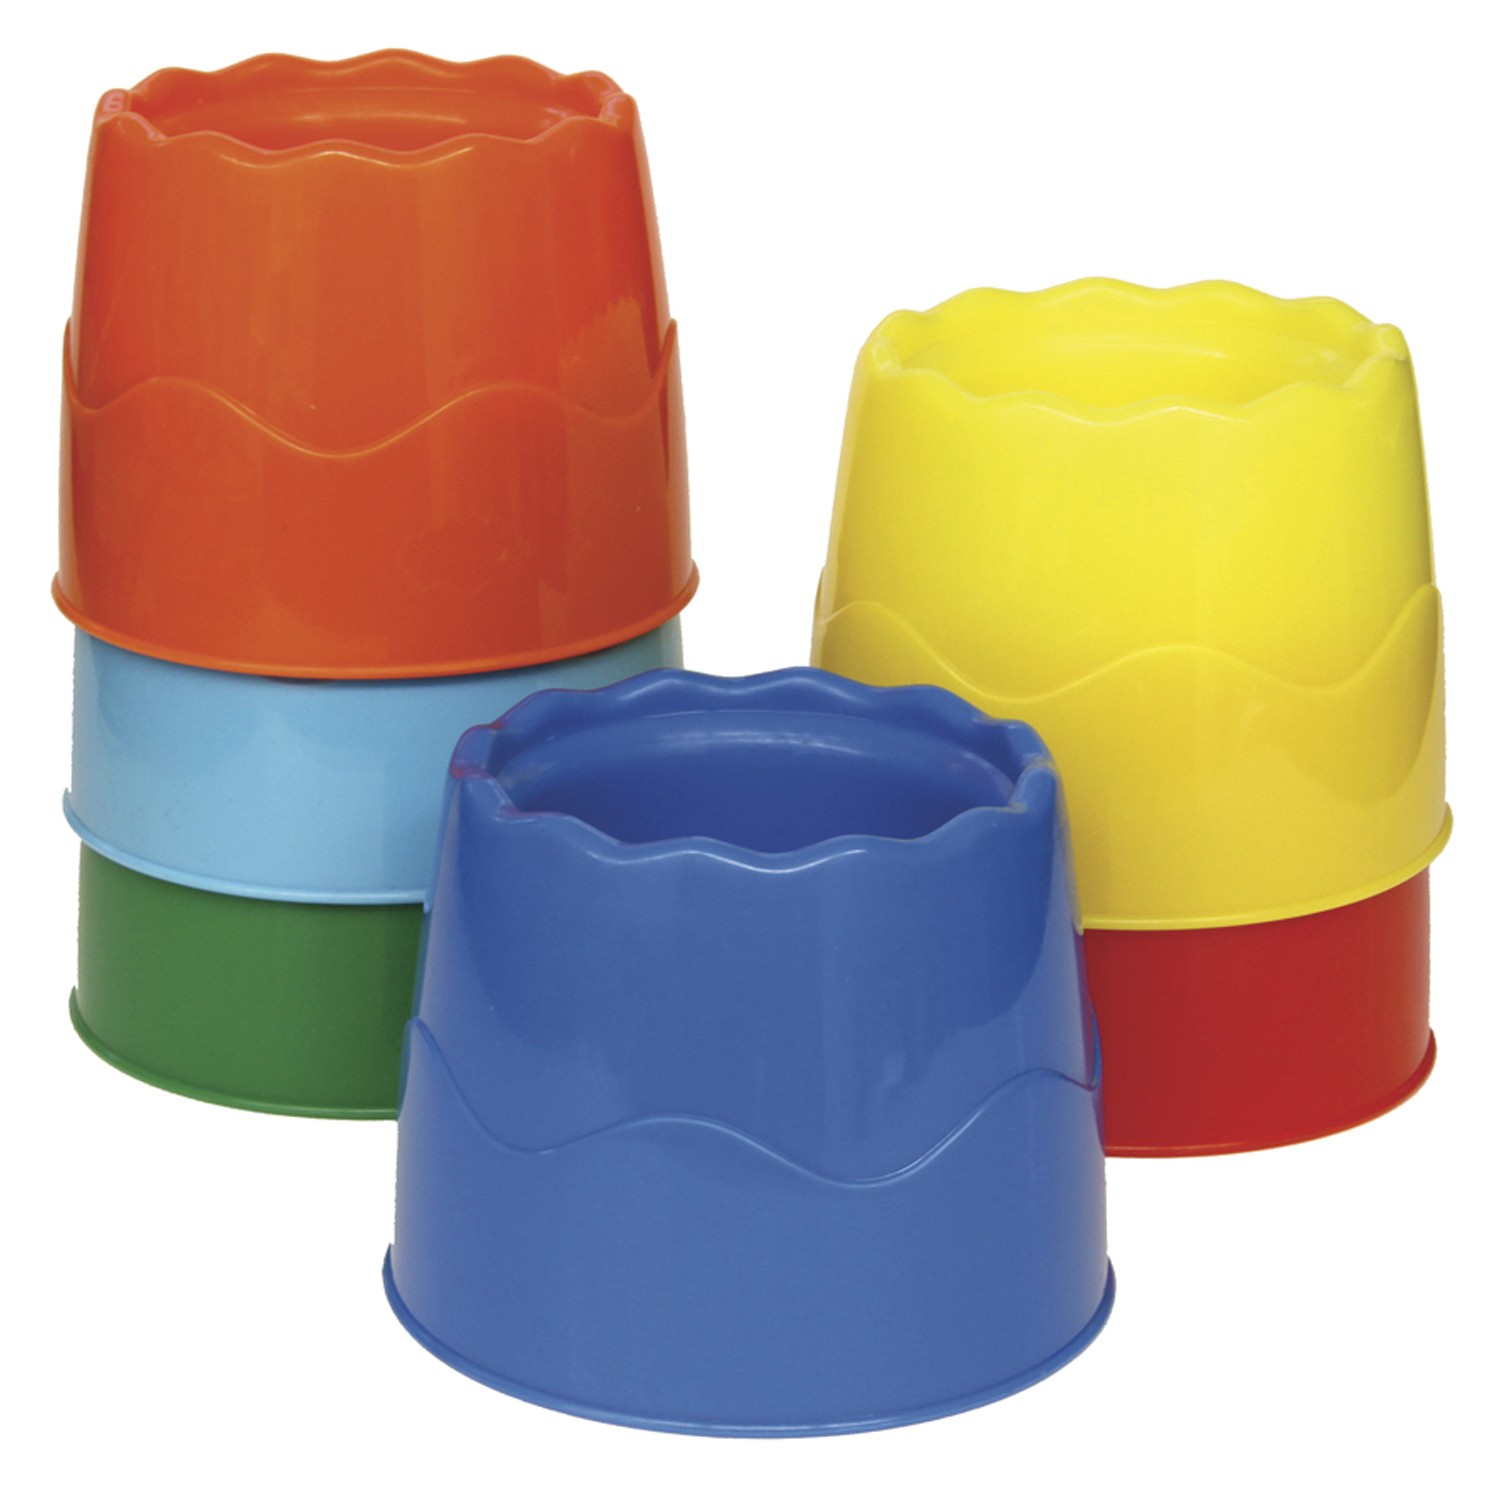 Stable Water Pots, Assorted Colors, 4.5" Diameter, 6 Pieces